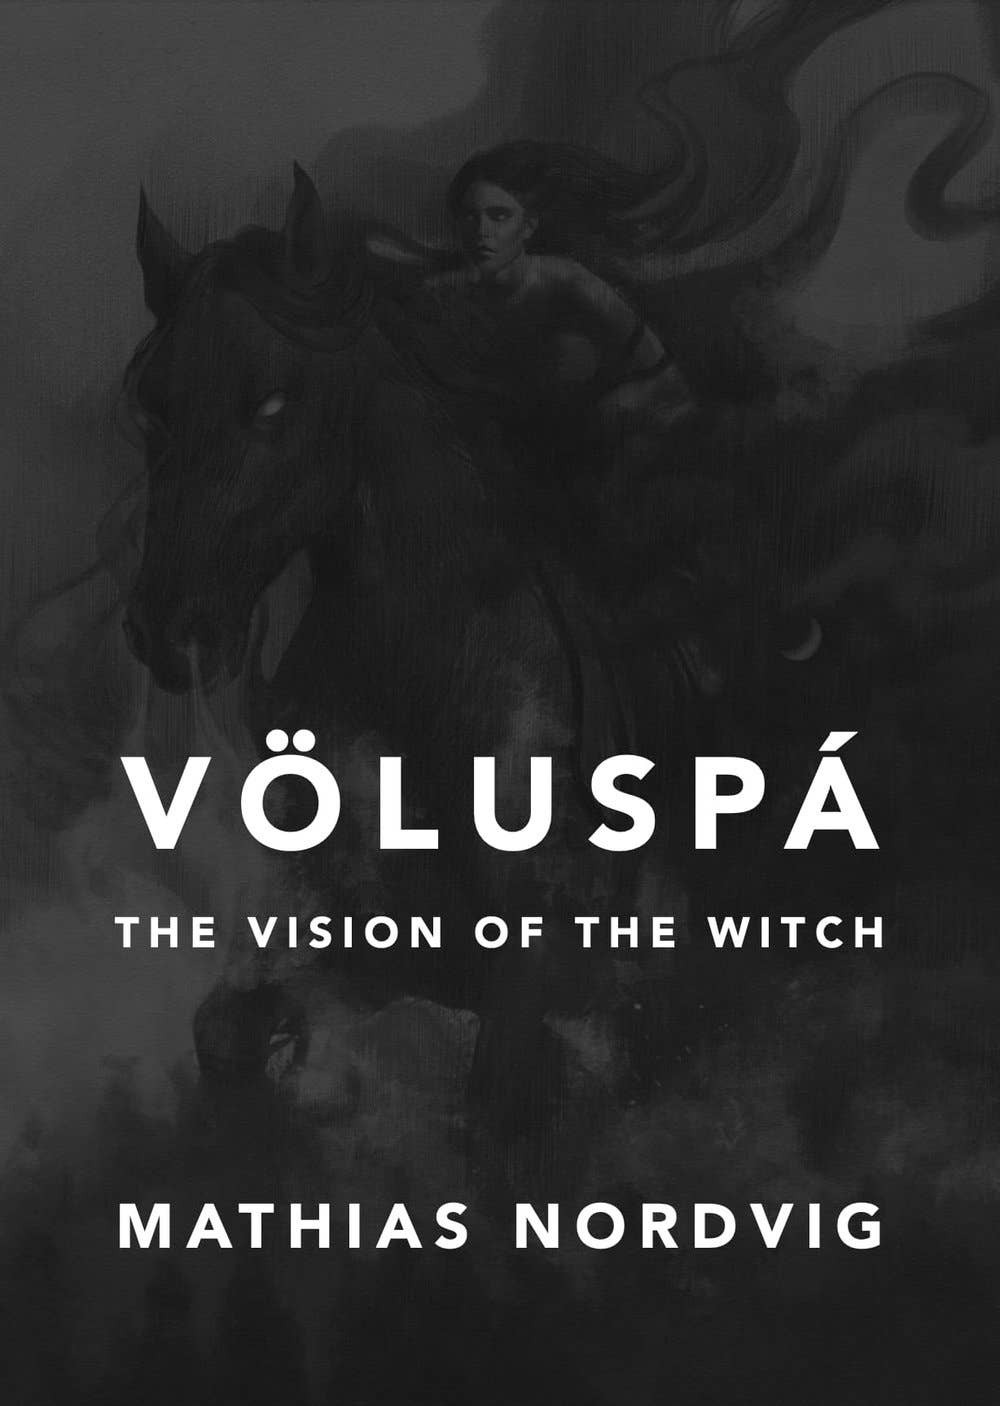 Völuspá: The Vision of the Witch by Mathias Nordvig.